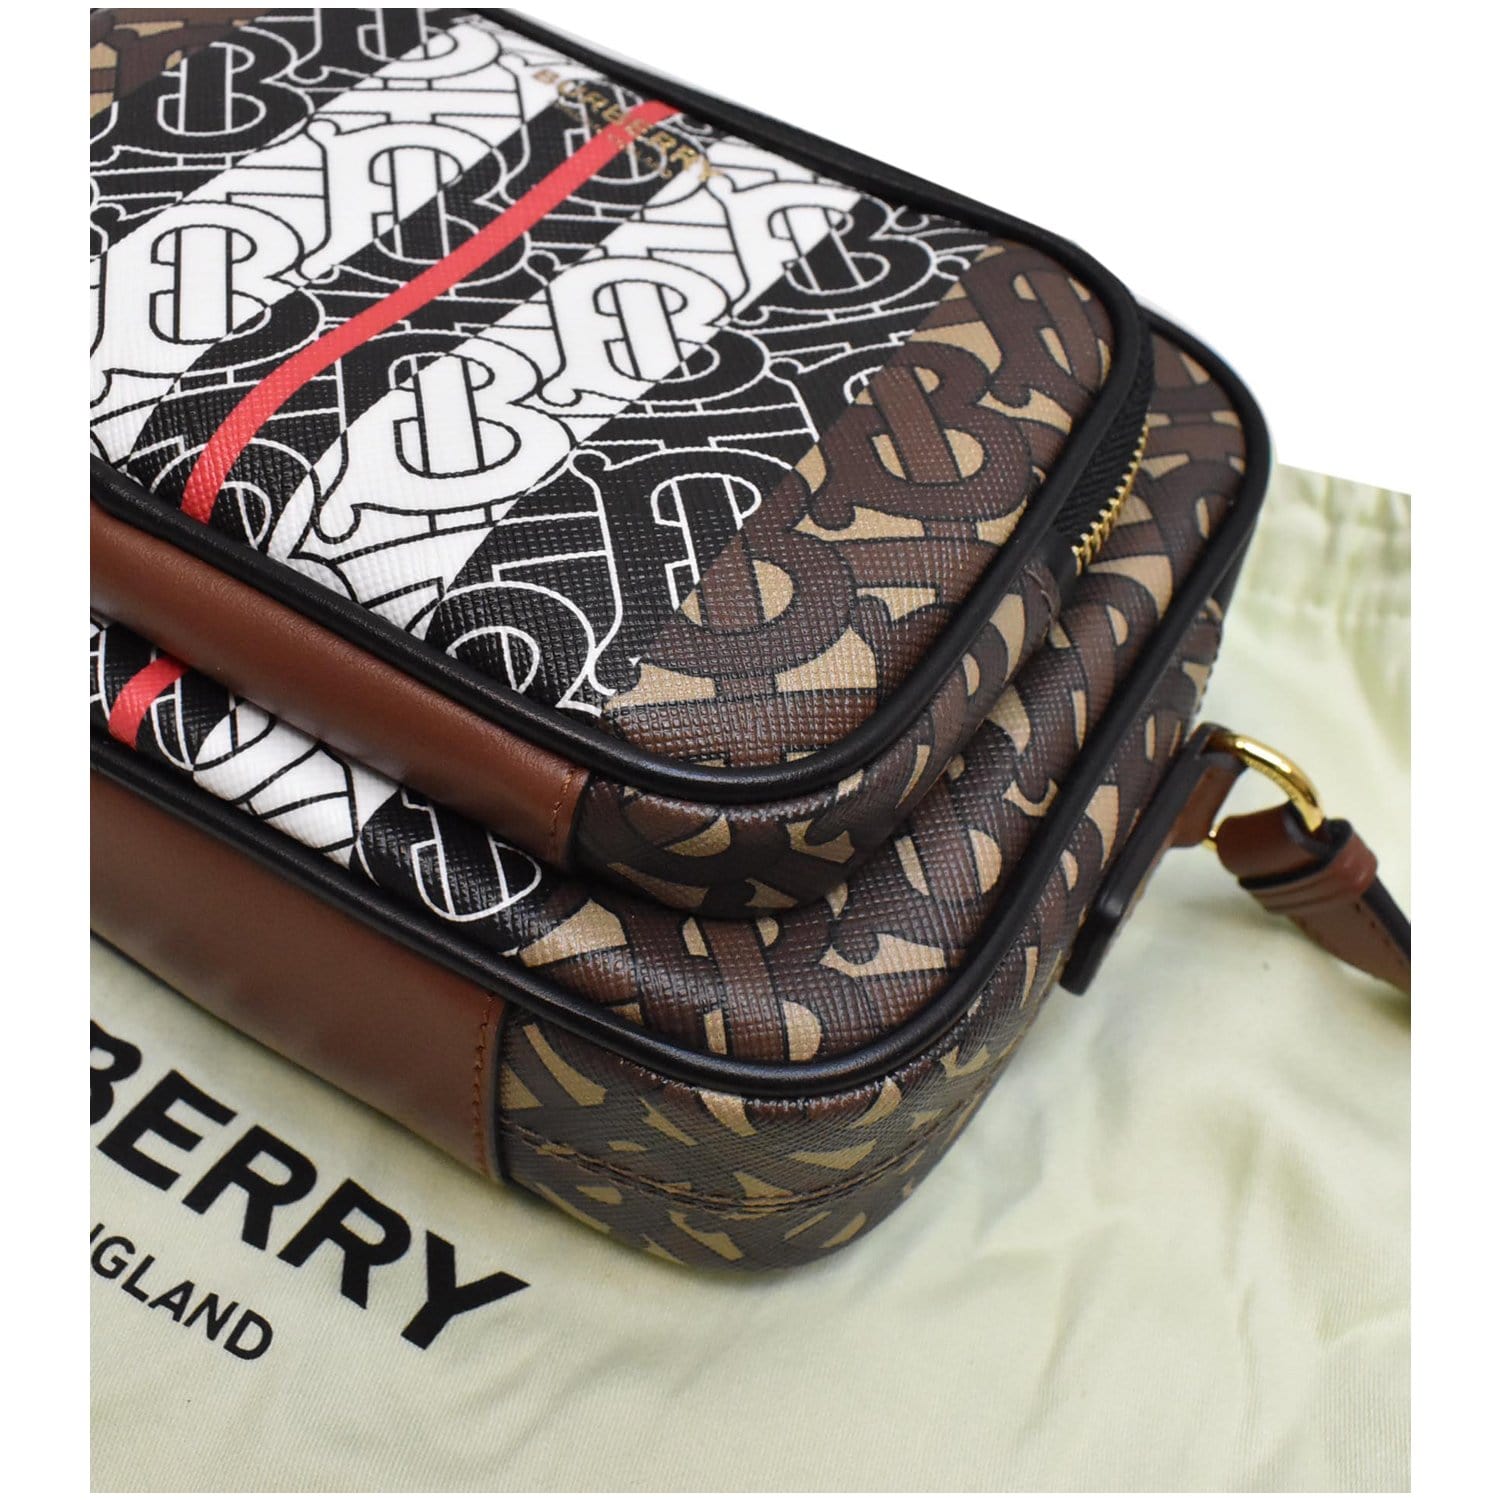 Burberry Small Monogram Stripe E-Canvas Cube Bag